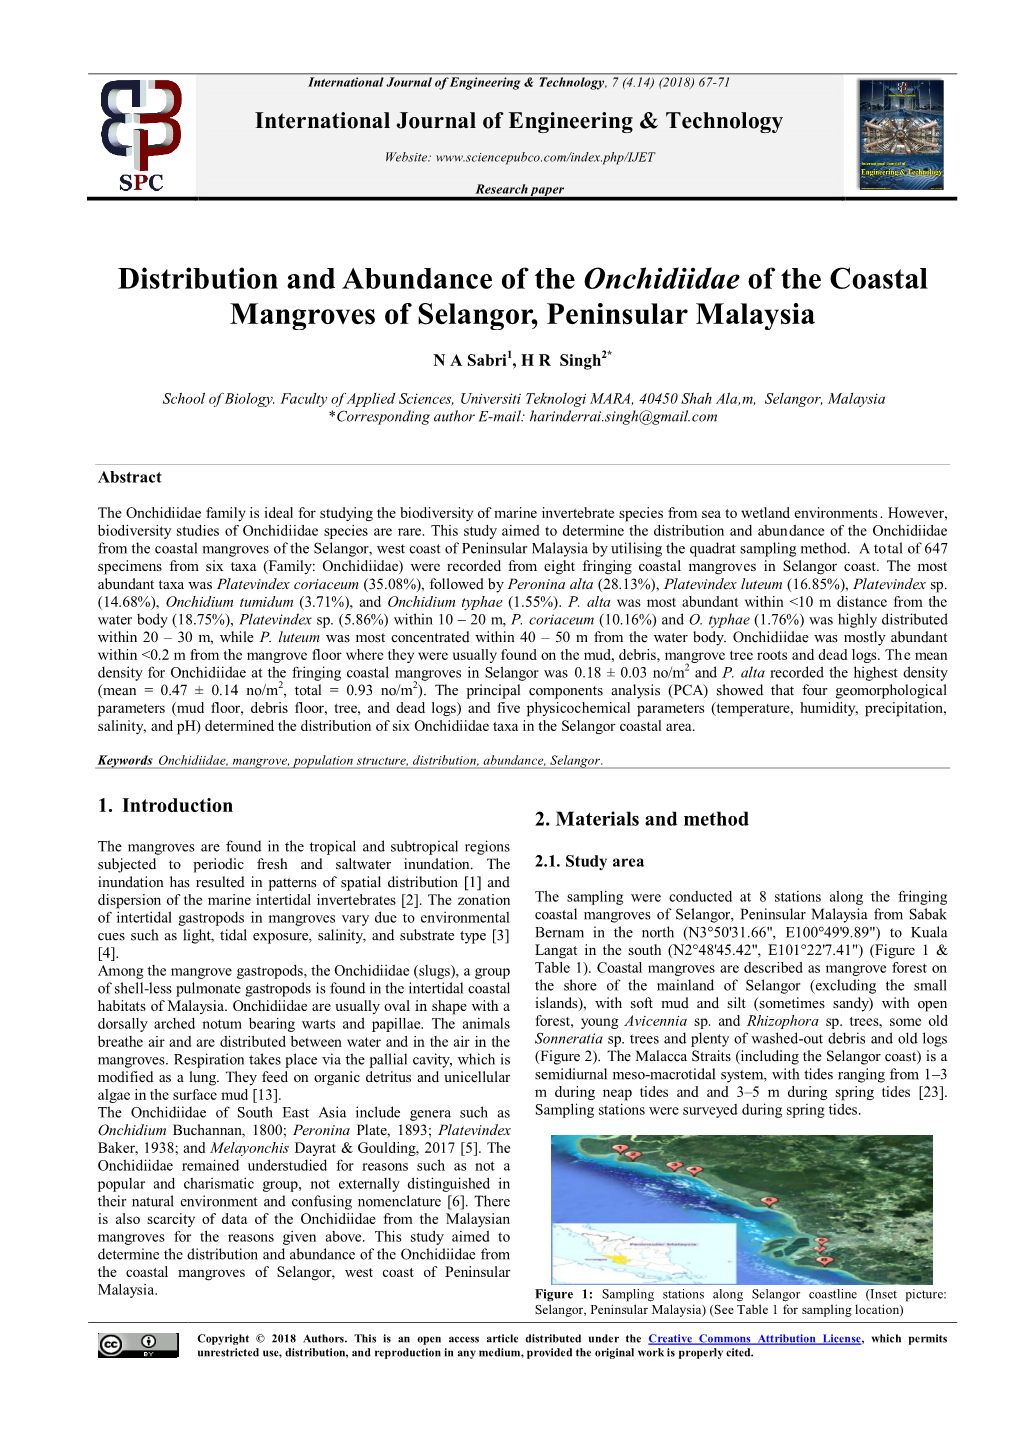 Distribution and Abundance of the Onchidiidae of the Coastal Mangroves of Selangor, Peninsular Malaysia